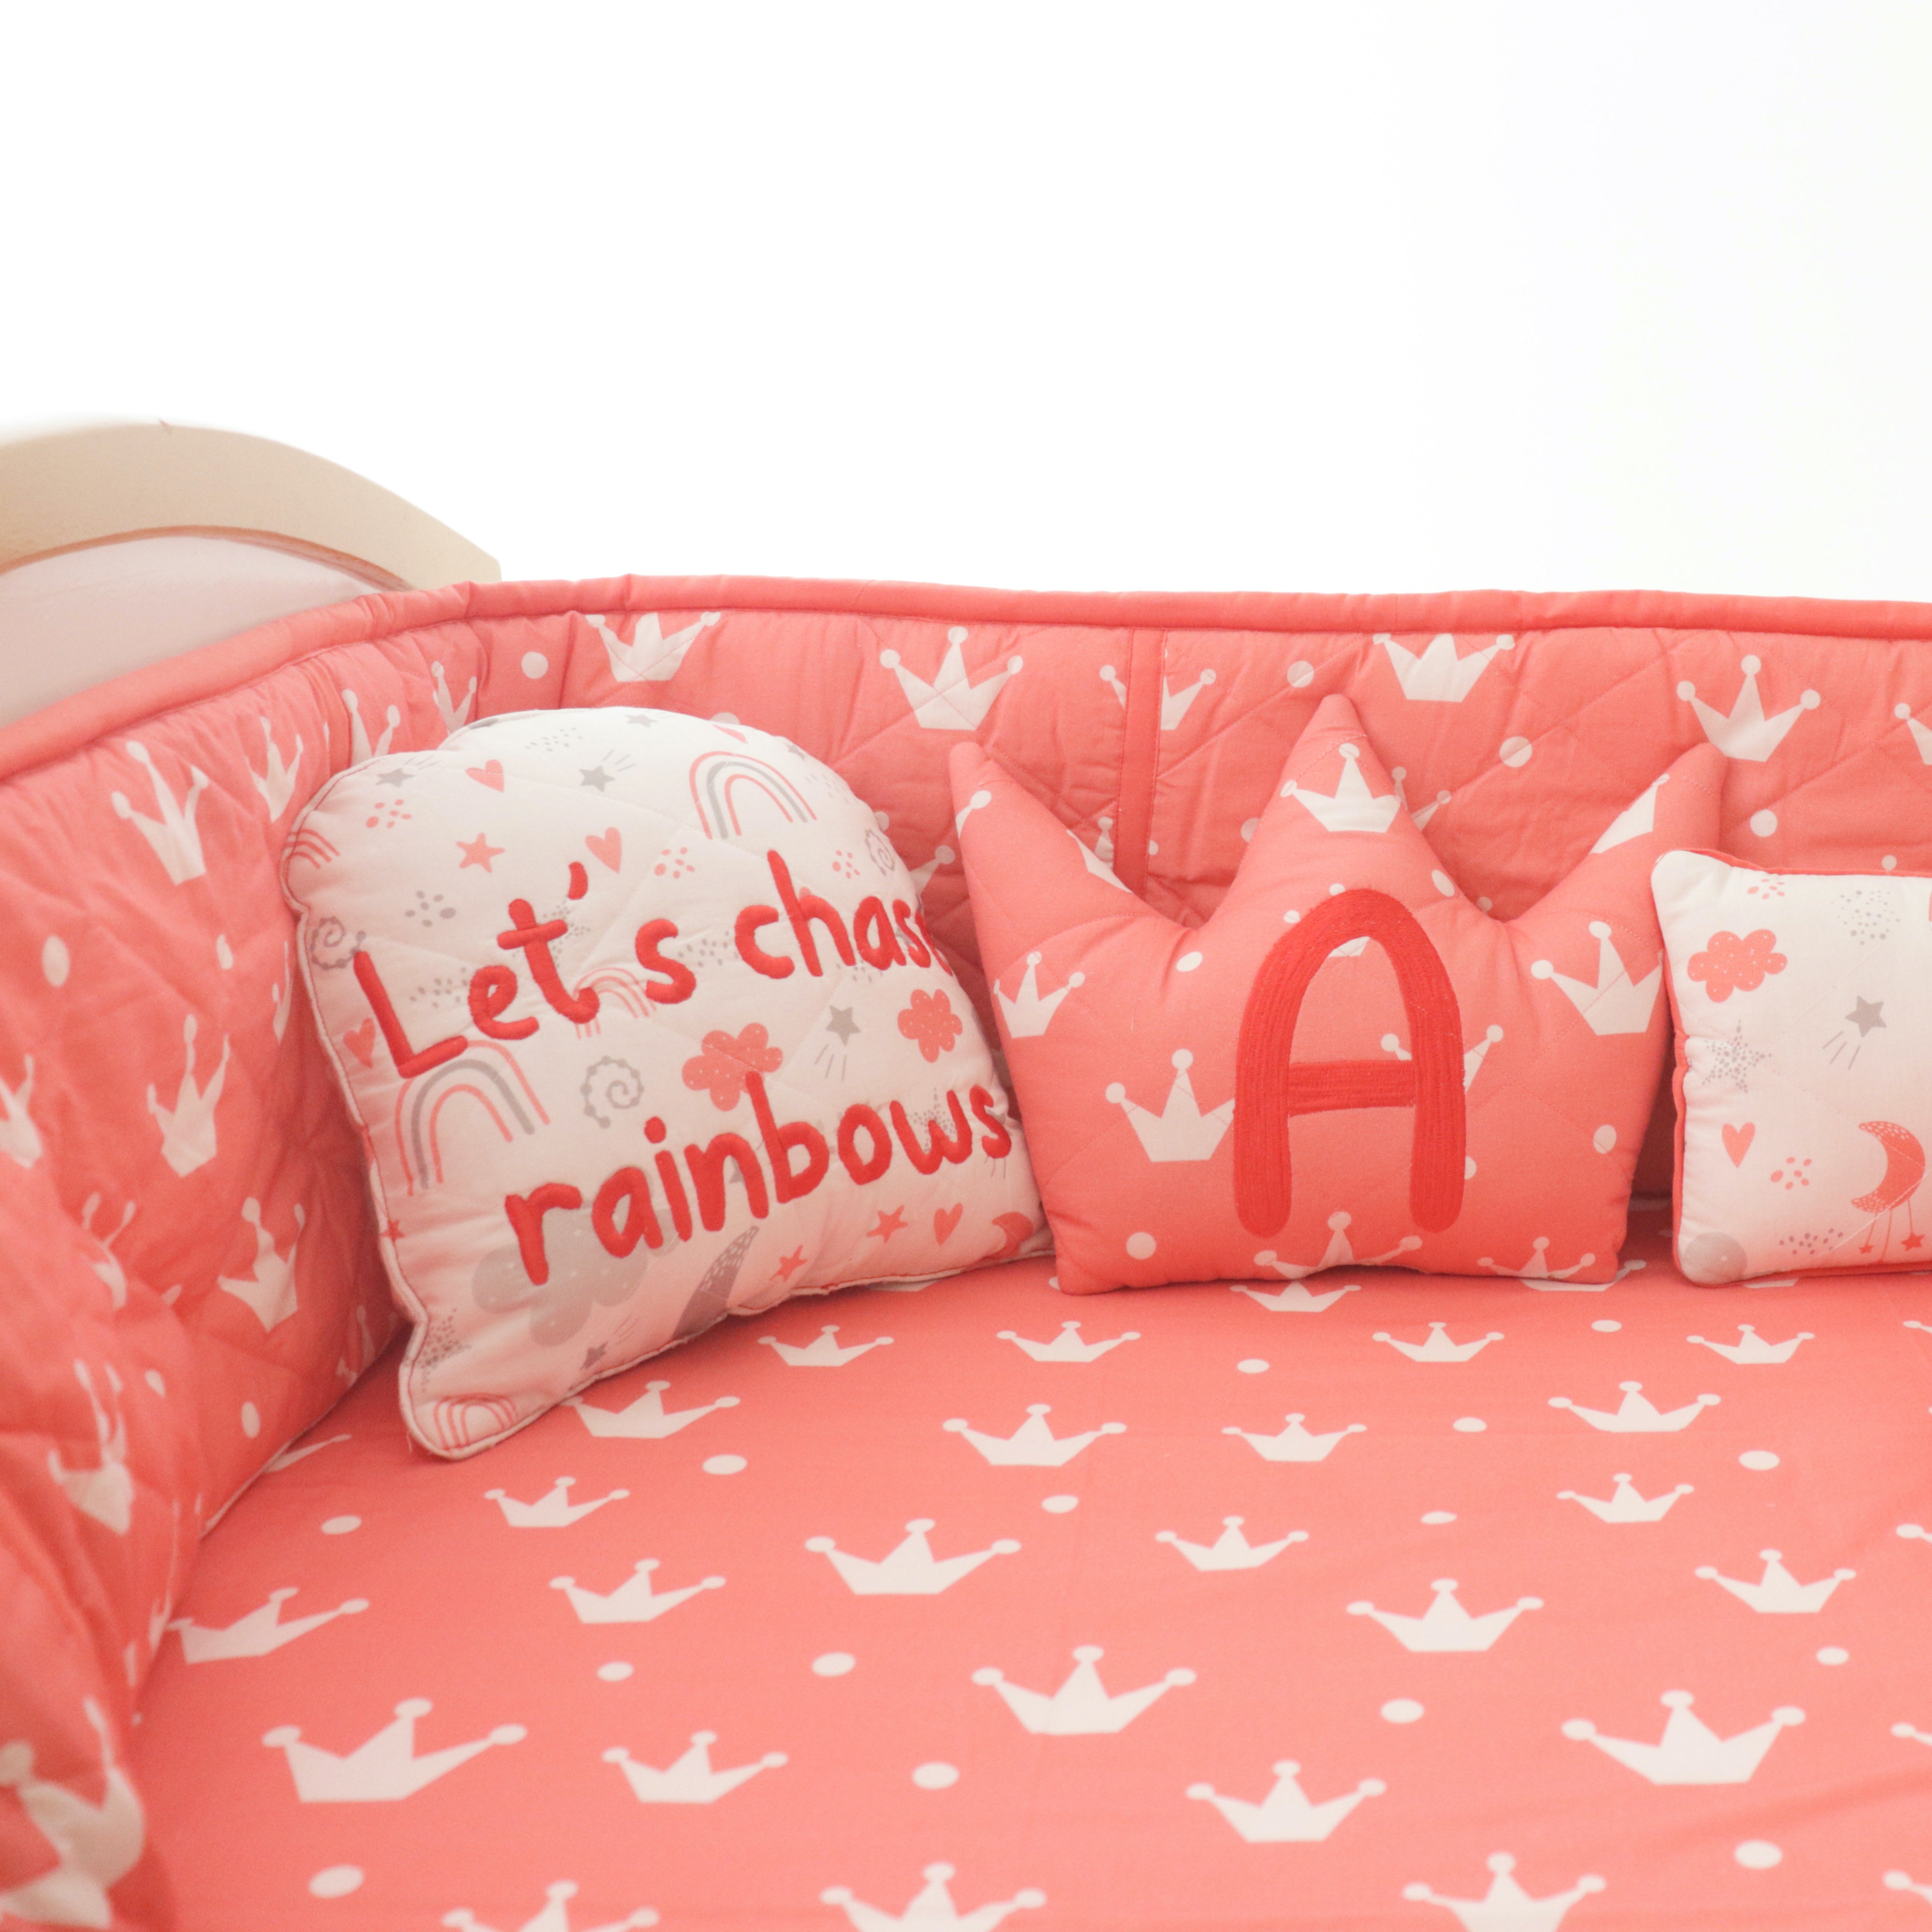 Let's Chase Rainbows - Throw Cushion